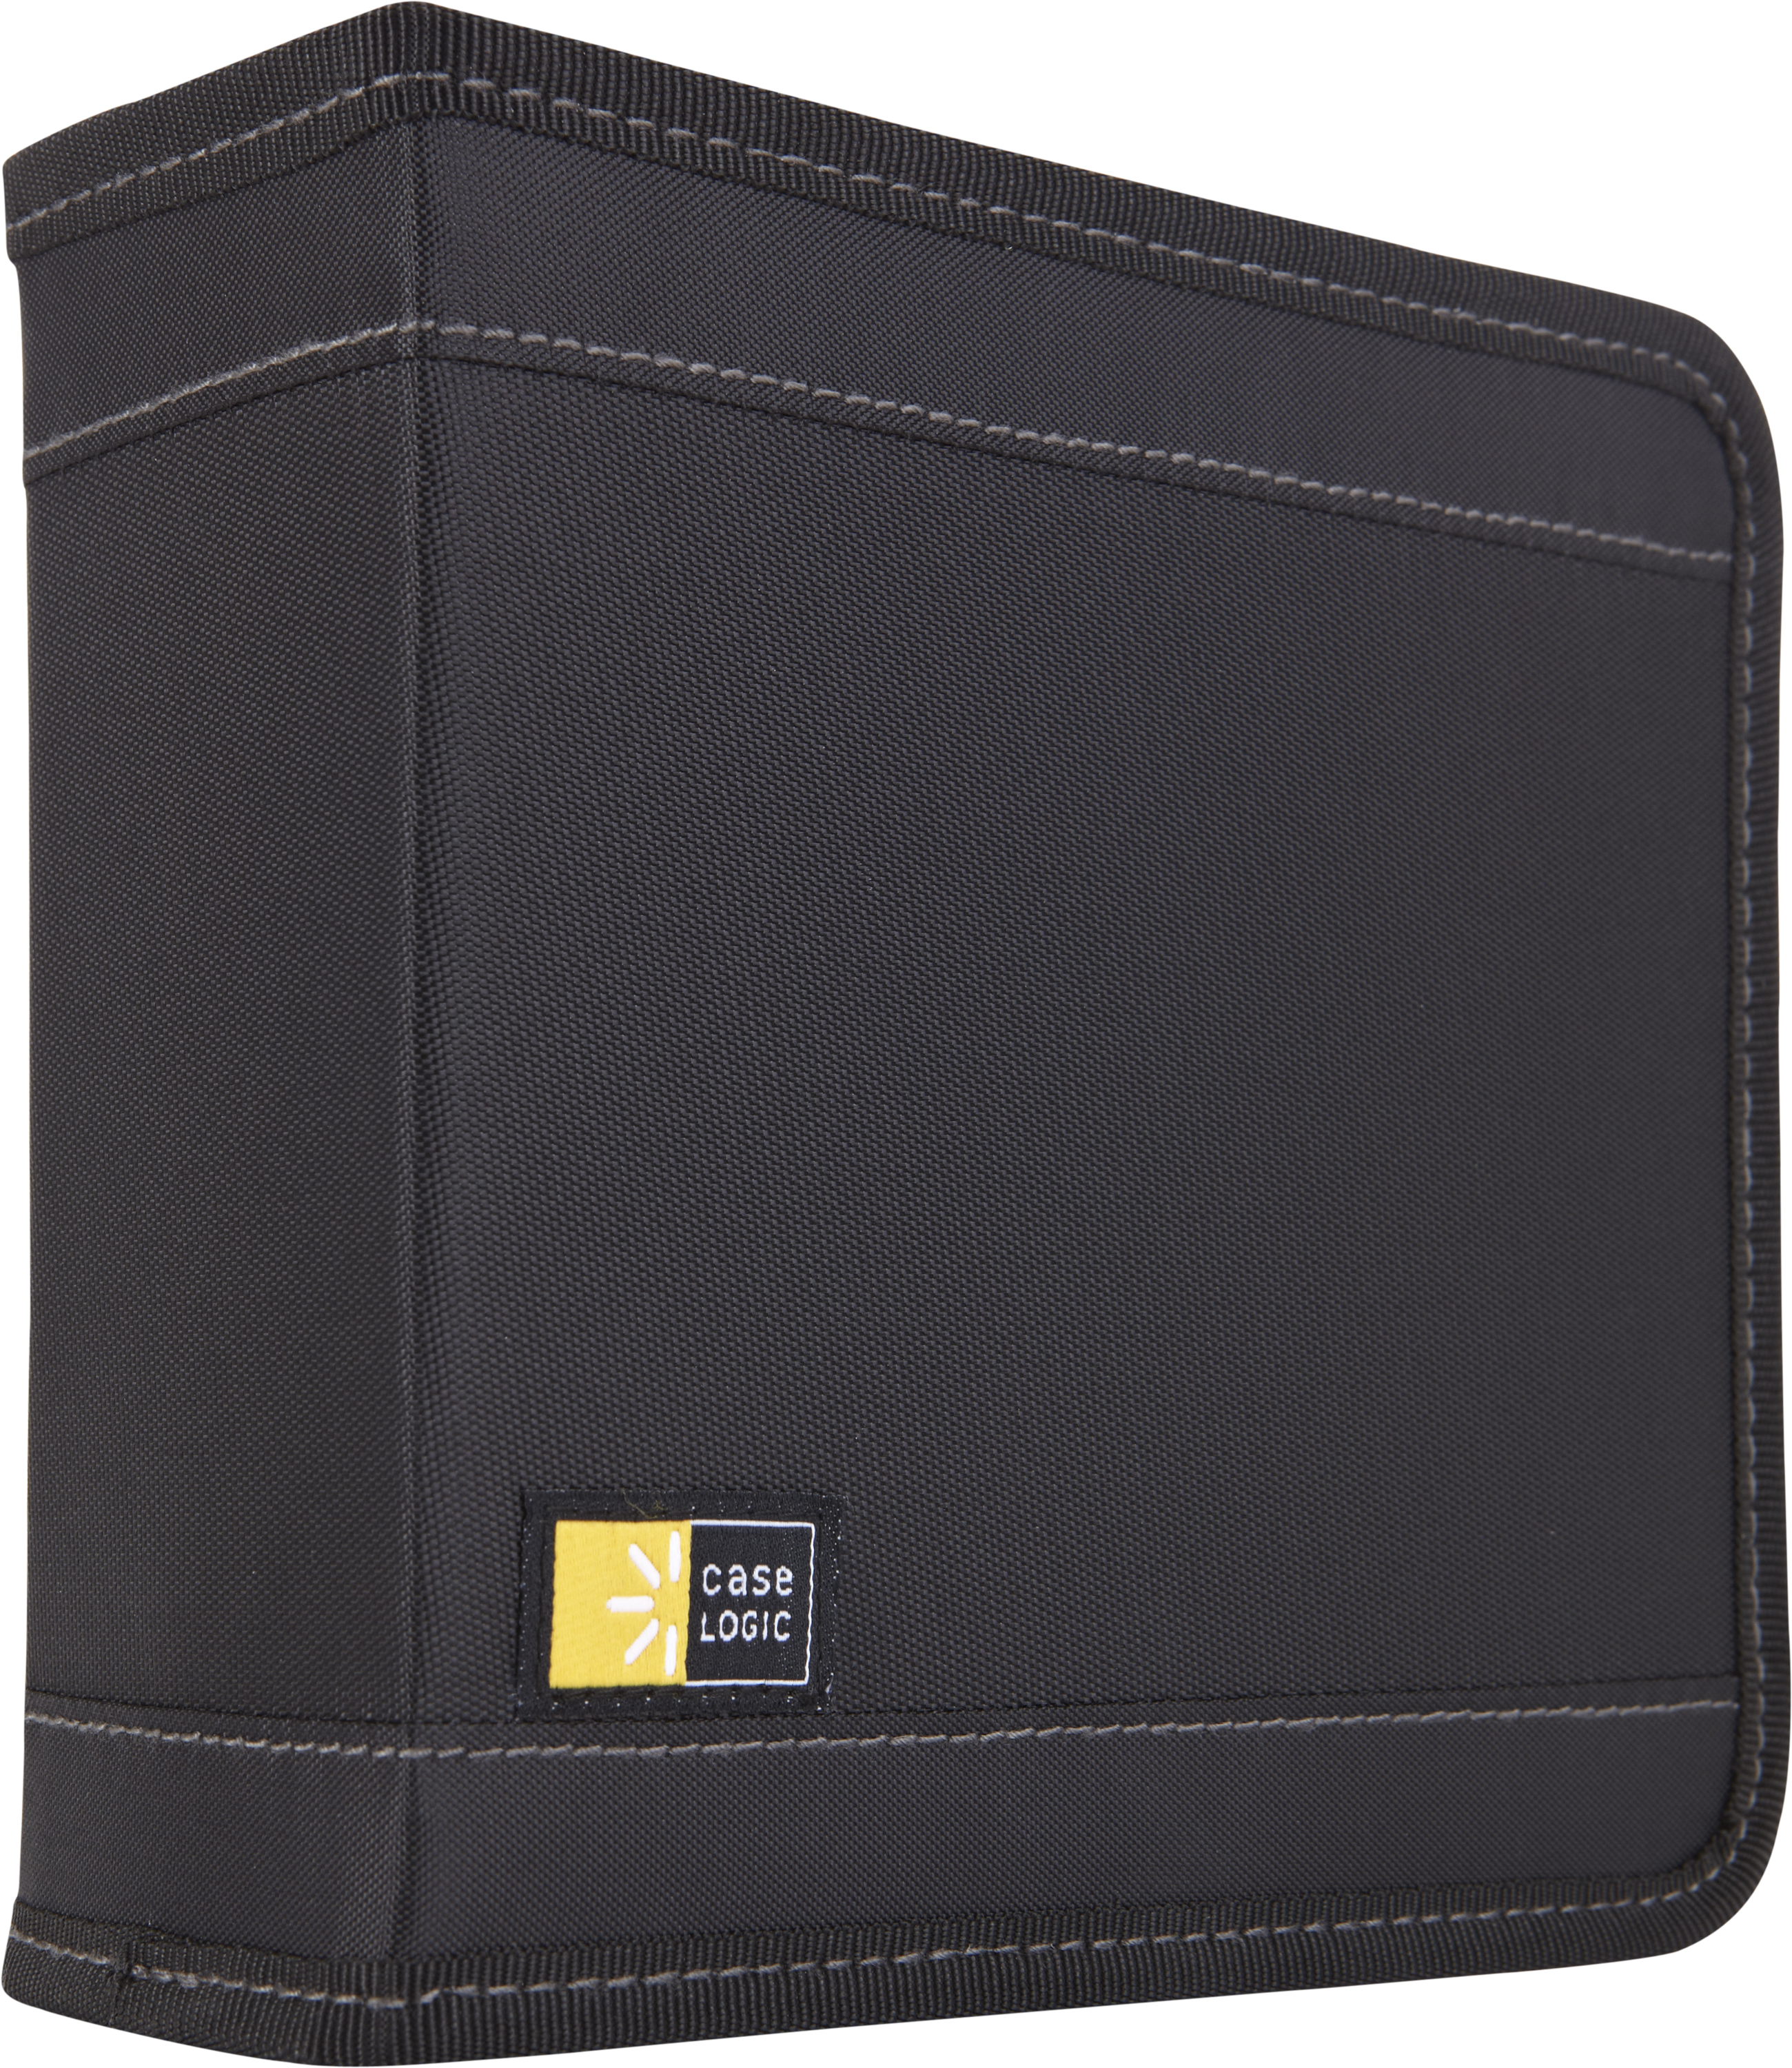 Case Logic CD Wallet 32 CDW-32 BLACK (3200038)